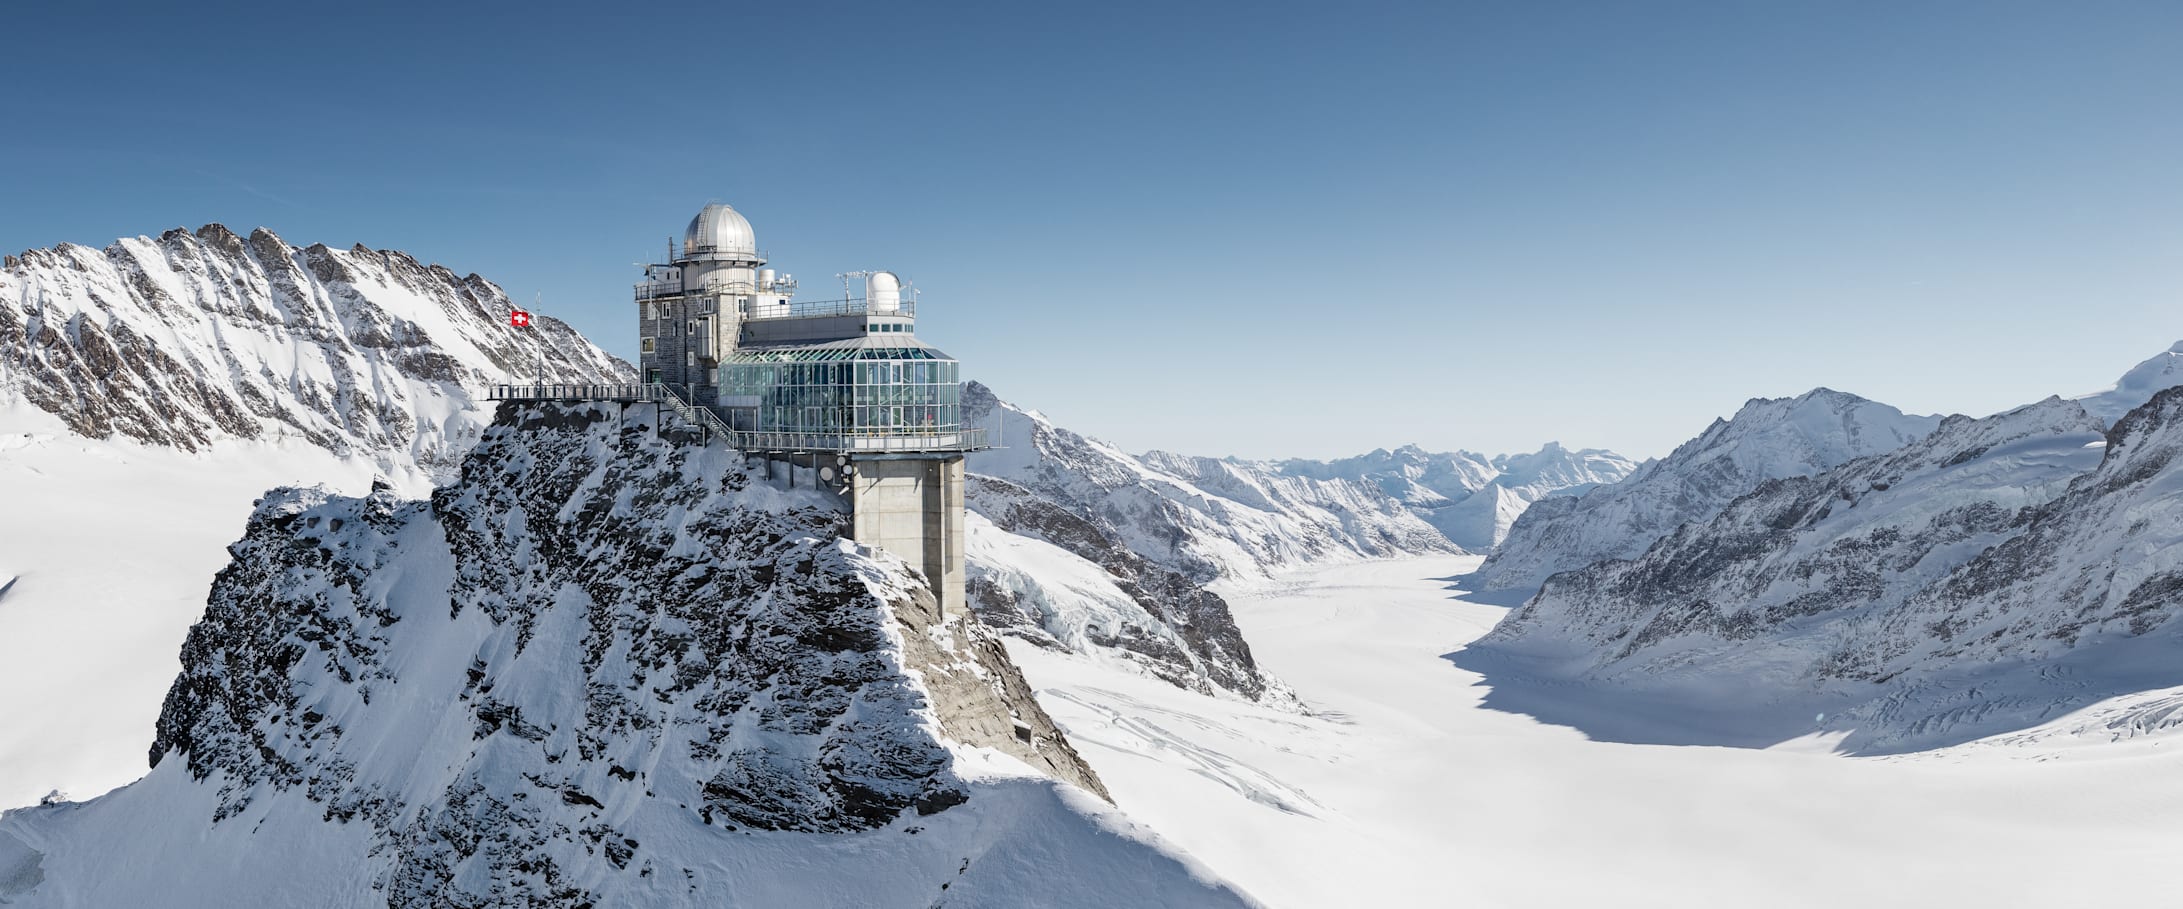 https://media.jungfrau.ch/image/upload/ar_1680:700,c_crop,f_auto,fl_lossy,q_auto/c_scale,w_2183/v1548413476/fileadmin/Jungfraujoch_Top_of_Europe/Jungfraujoch-Sphinx-Gletscher.jpg